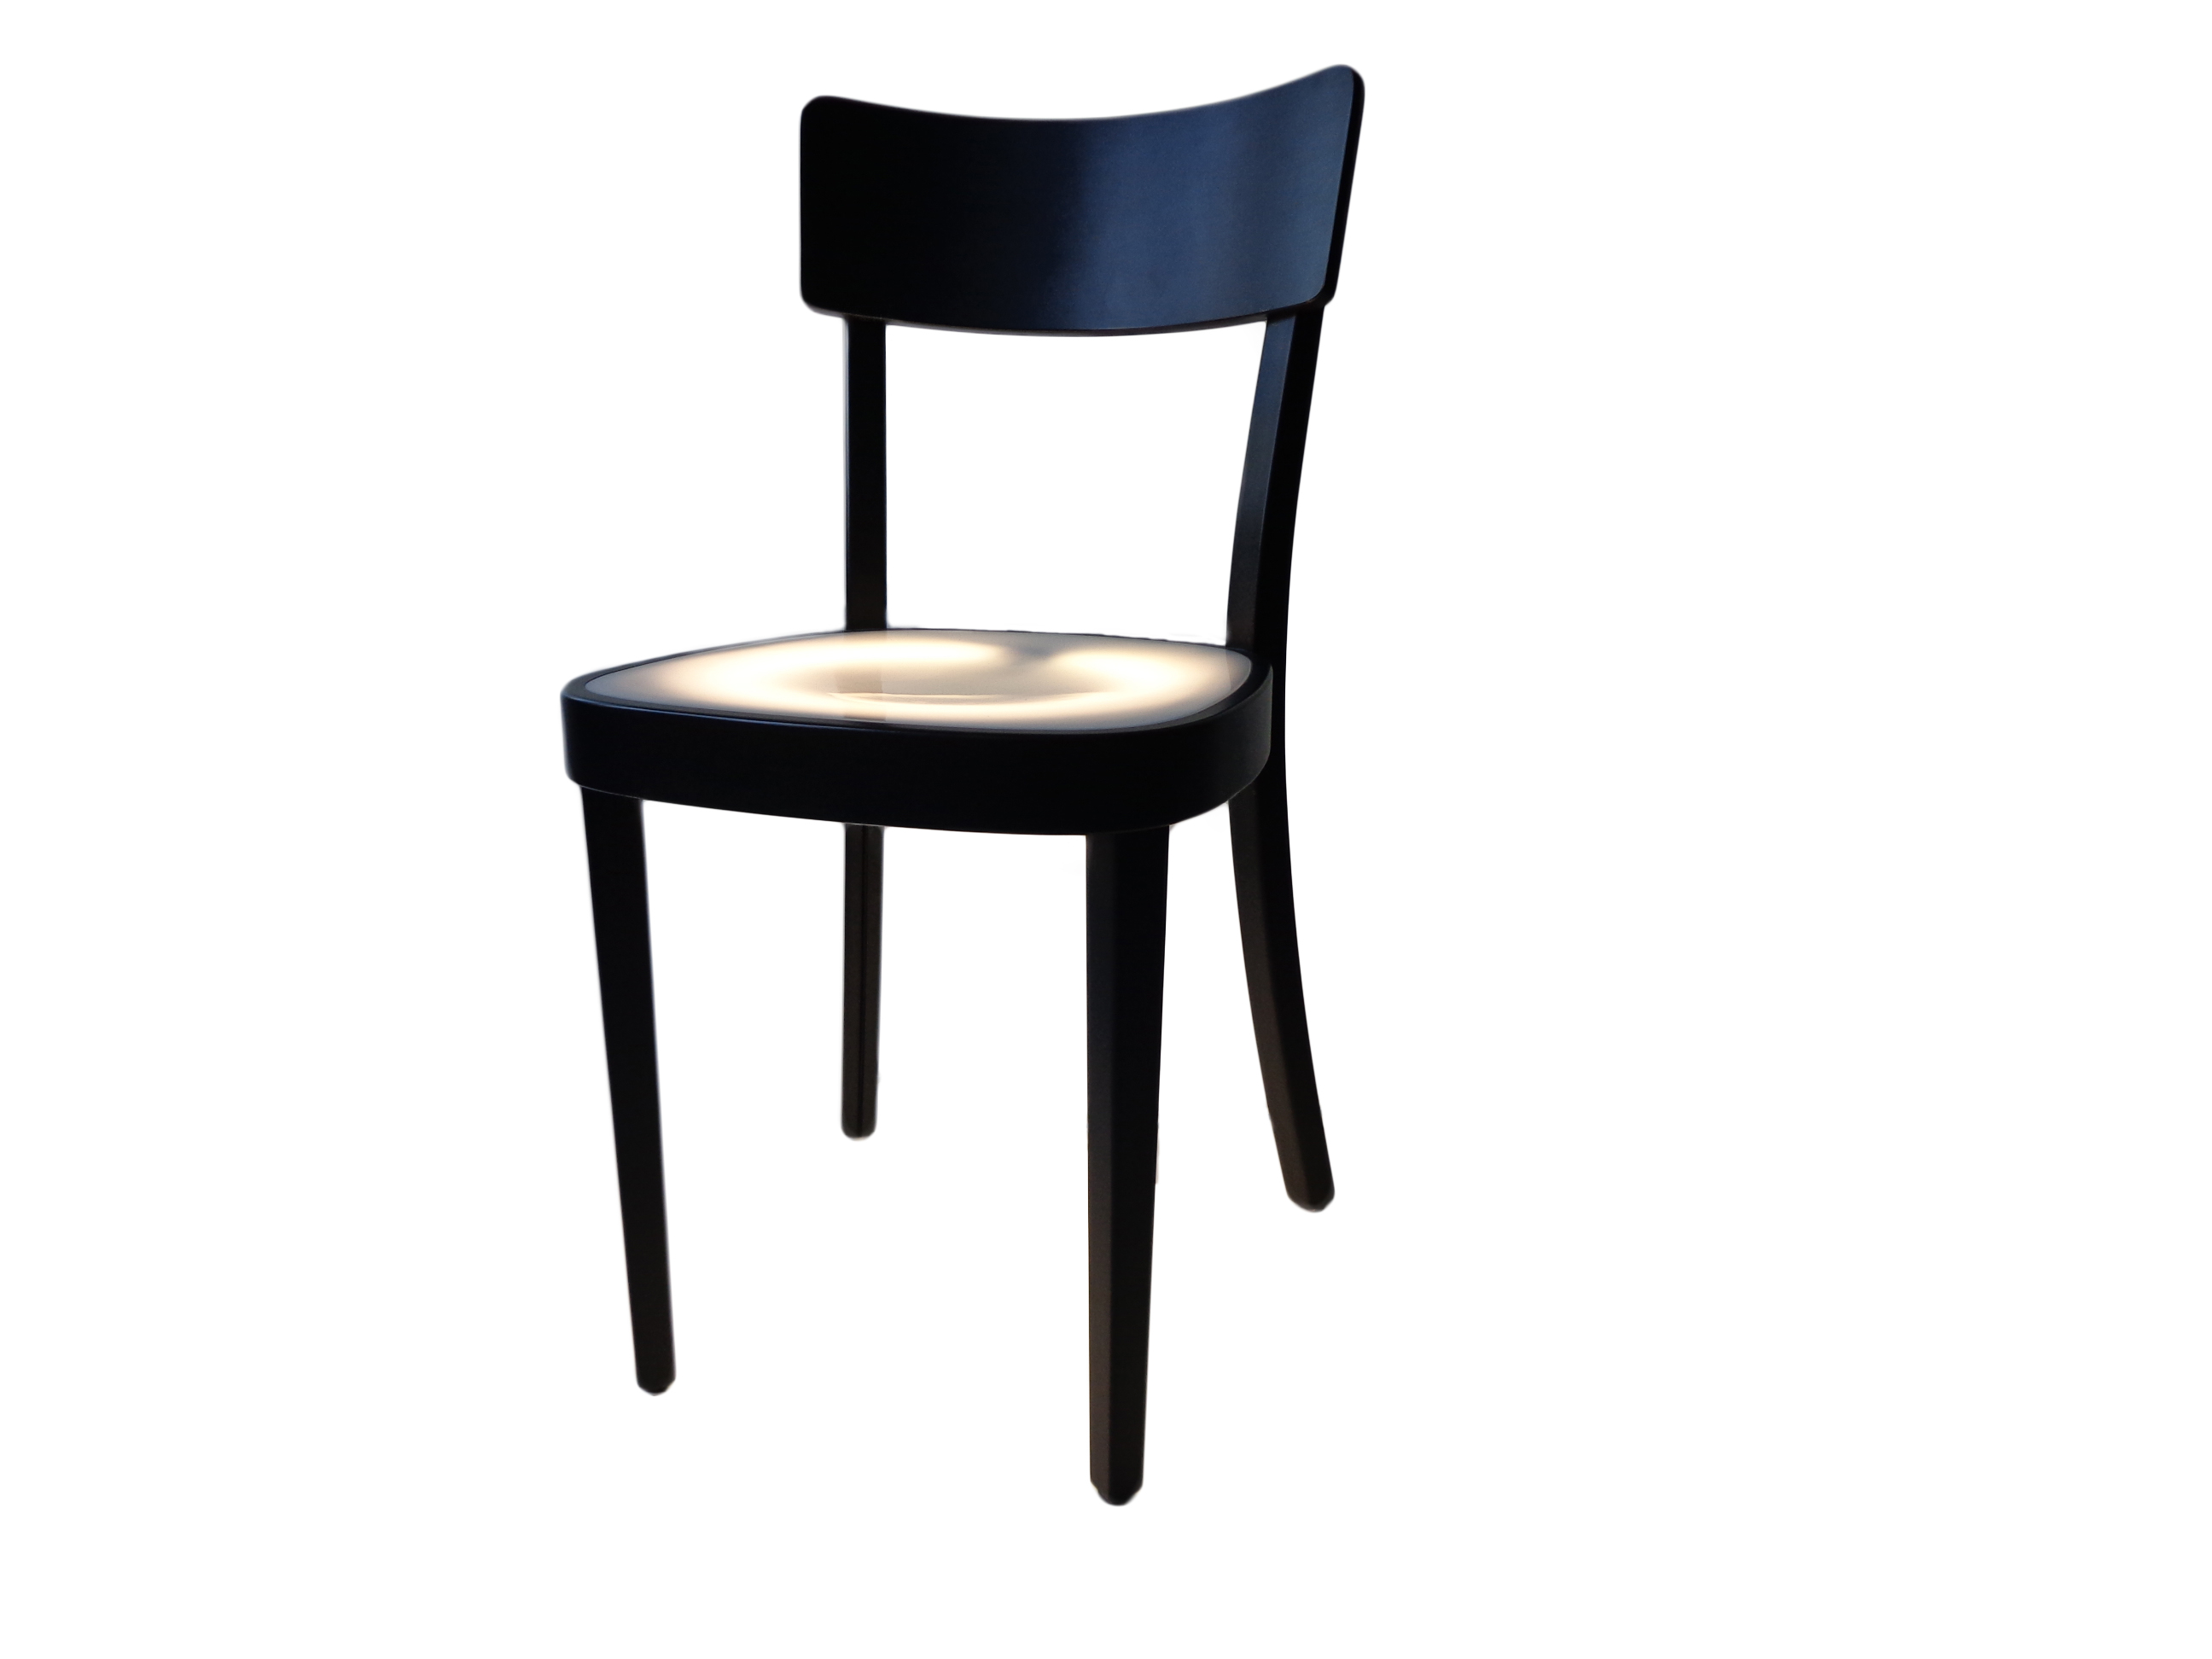 Horgen Glarus neonlight chair for Hidden